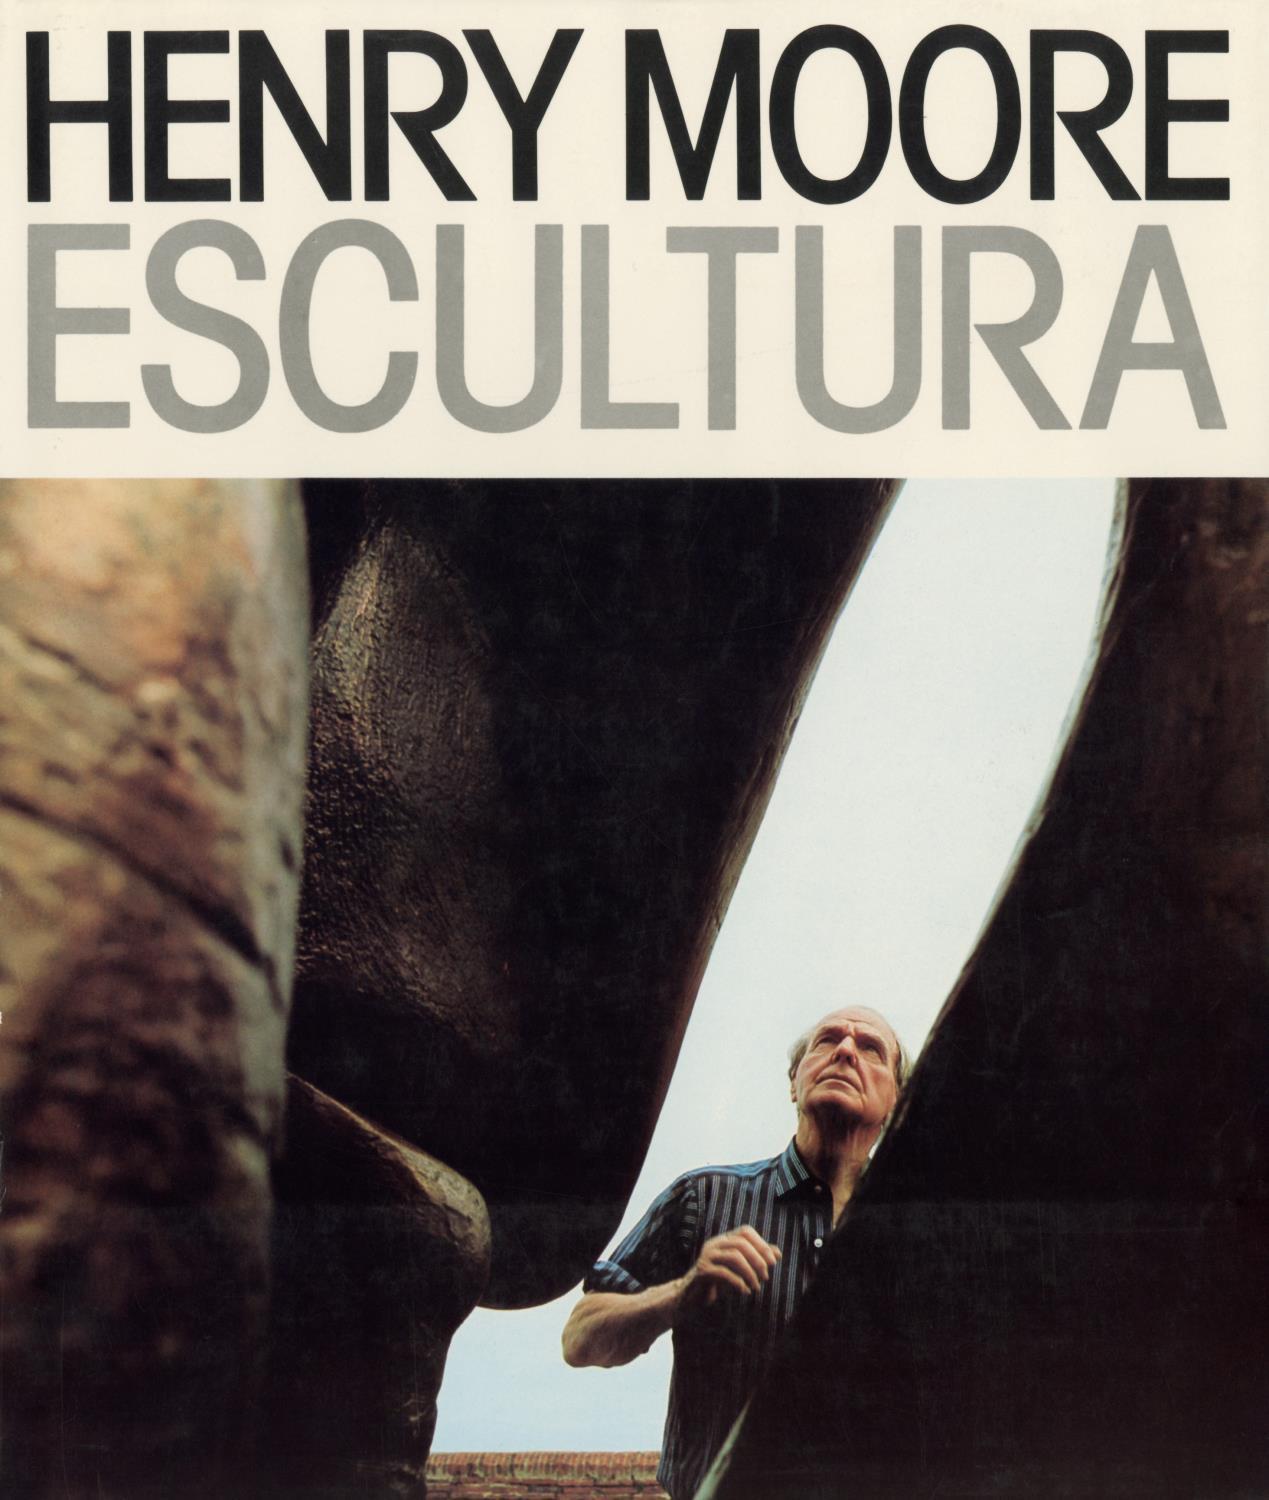 Henry Moore. Escultura